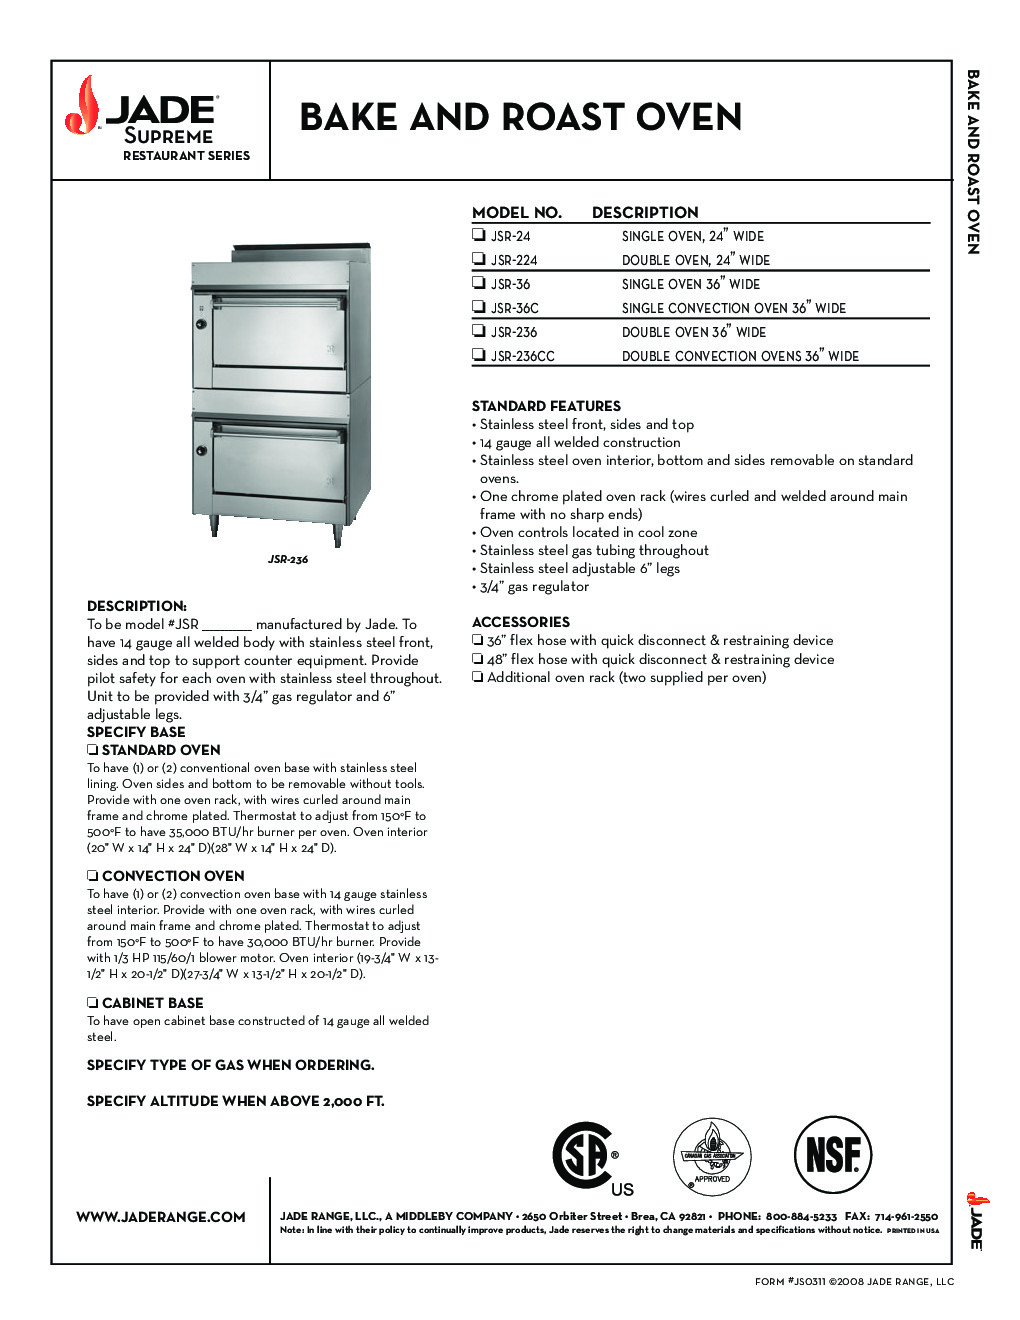 Jade JBR-236C Restaurant Type Bake & Roast Oven Gas Oven w/ 1 Standard & 1 Convection Oven